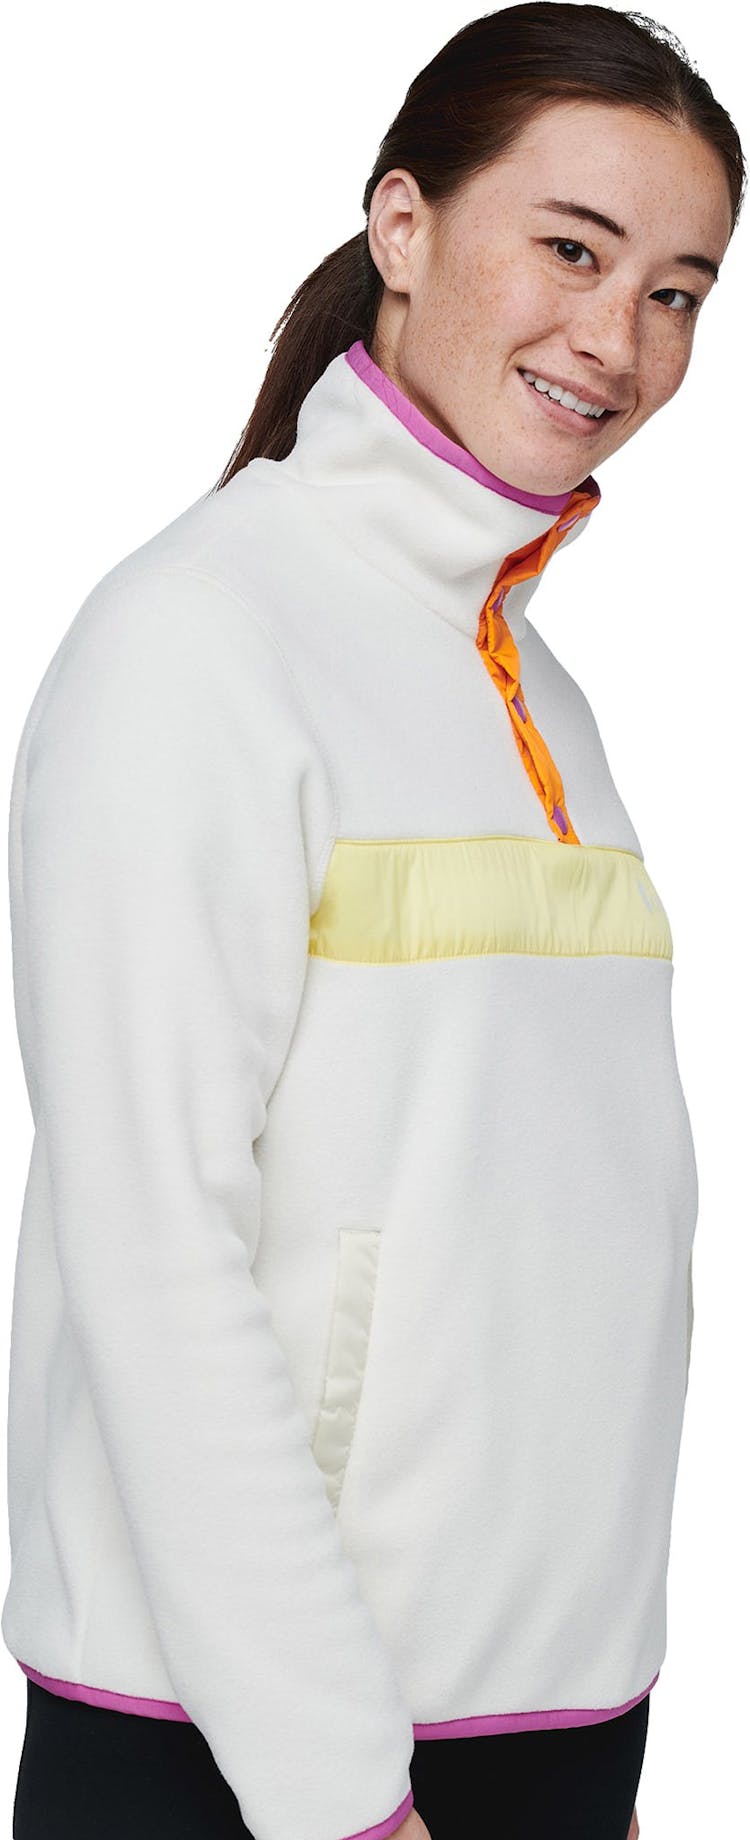 Product gallery image number 4 for product Teca 1/4 Snap Fleece Sweatshirt - Women's